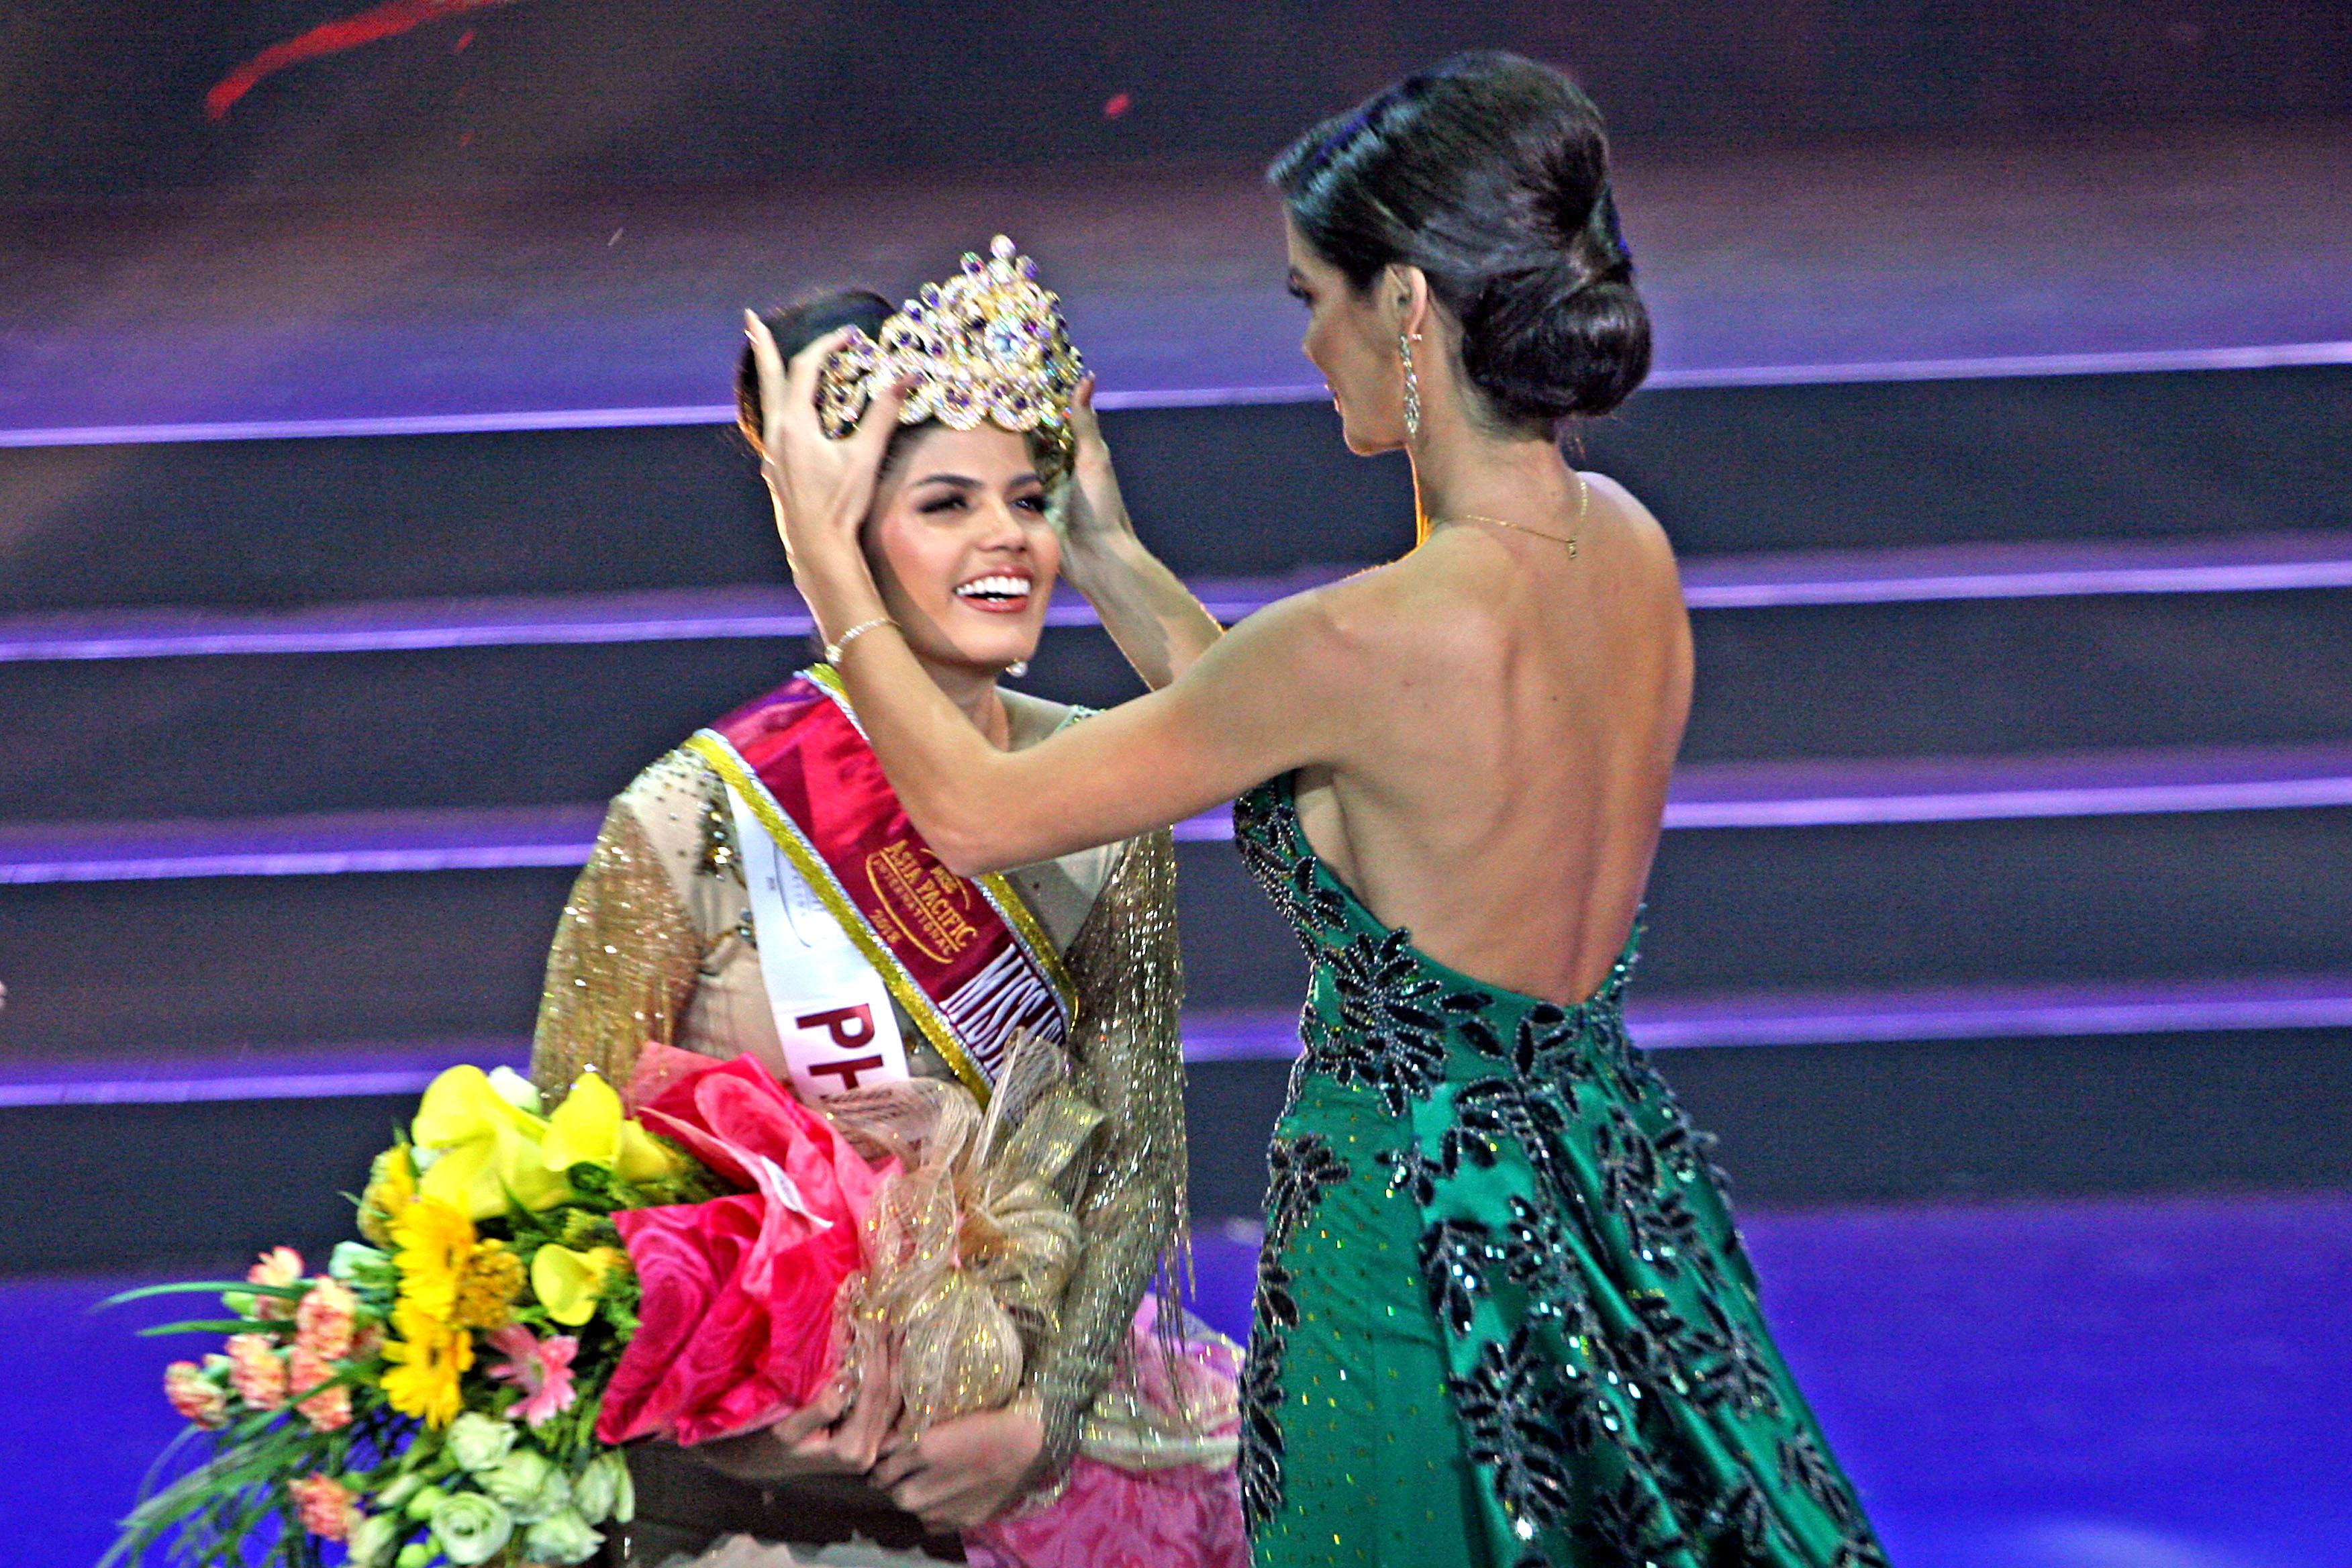 PHL bet wins Miss Asia Pacific International title GMA News Online